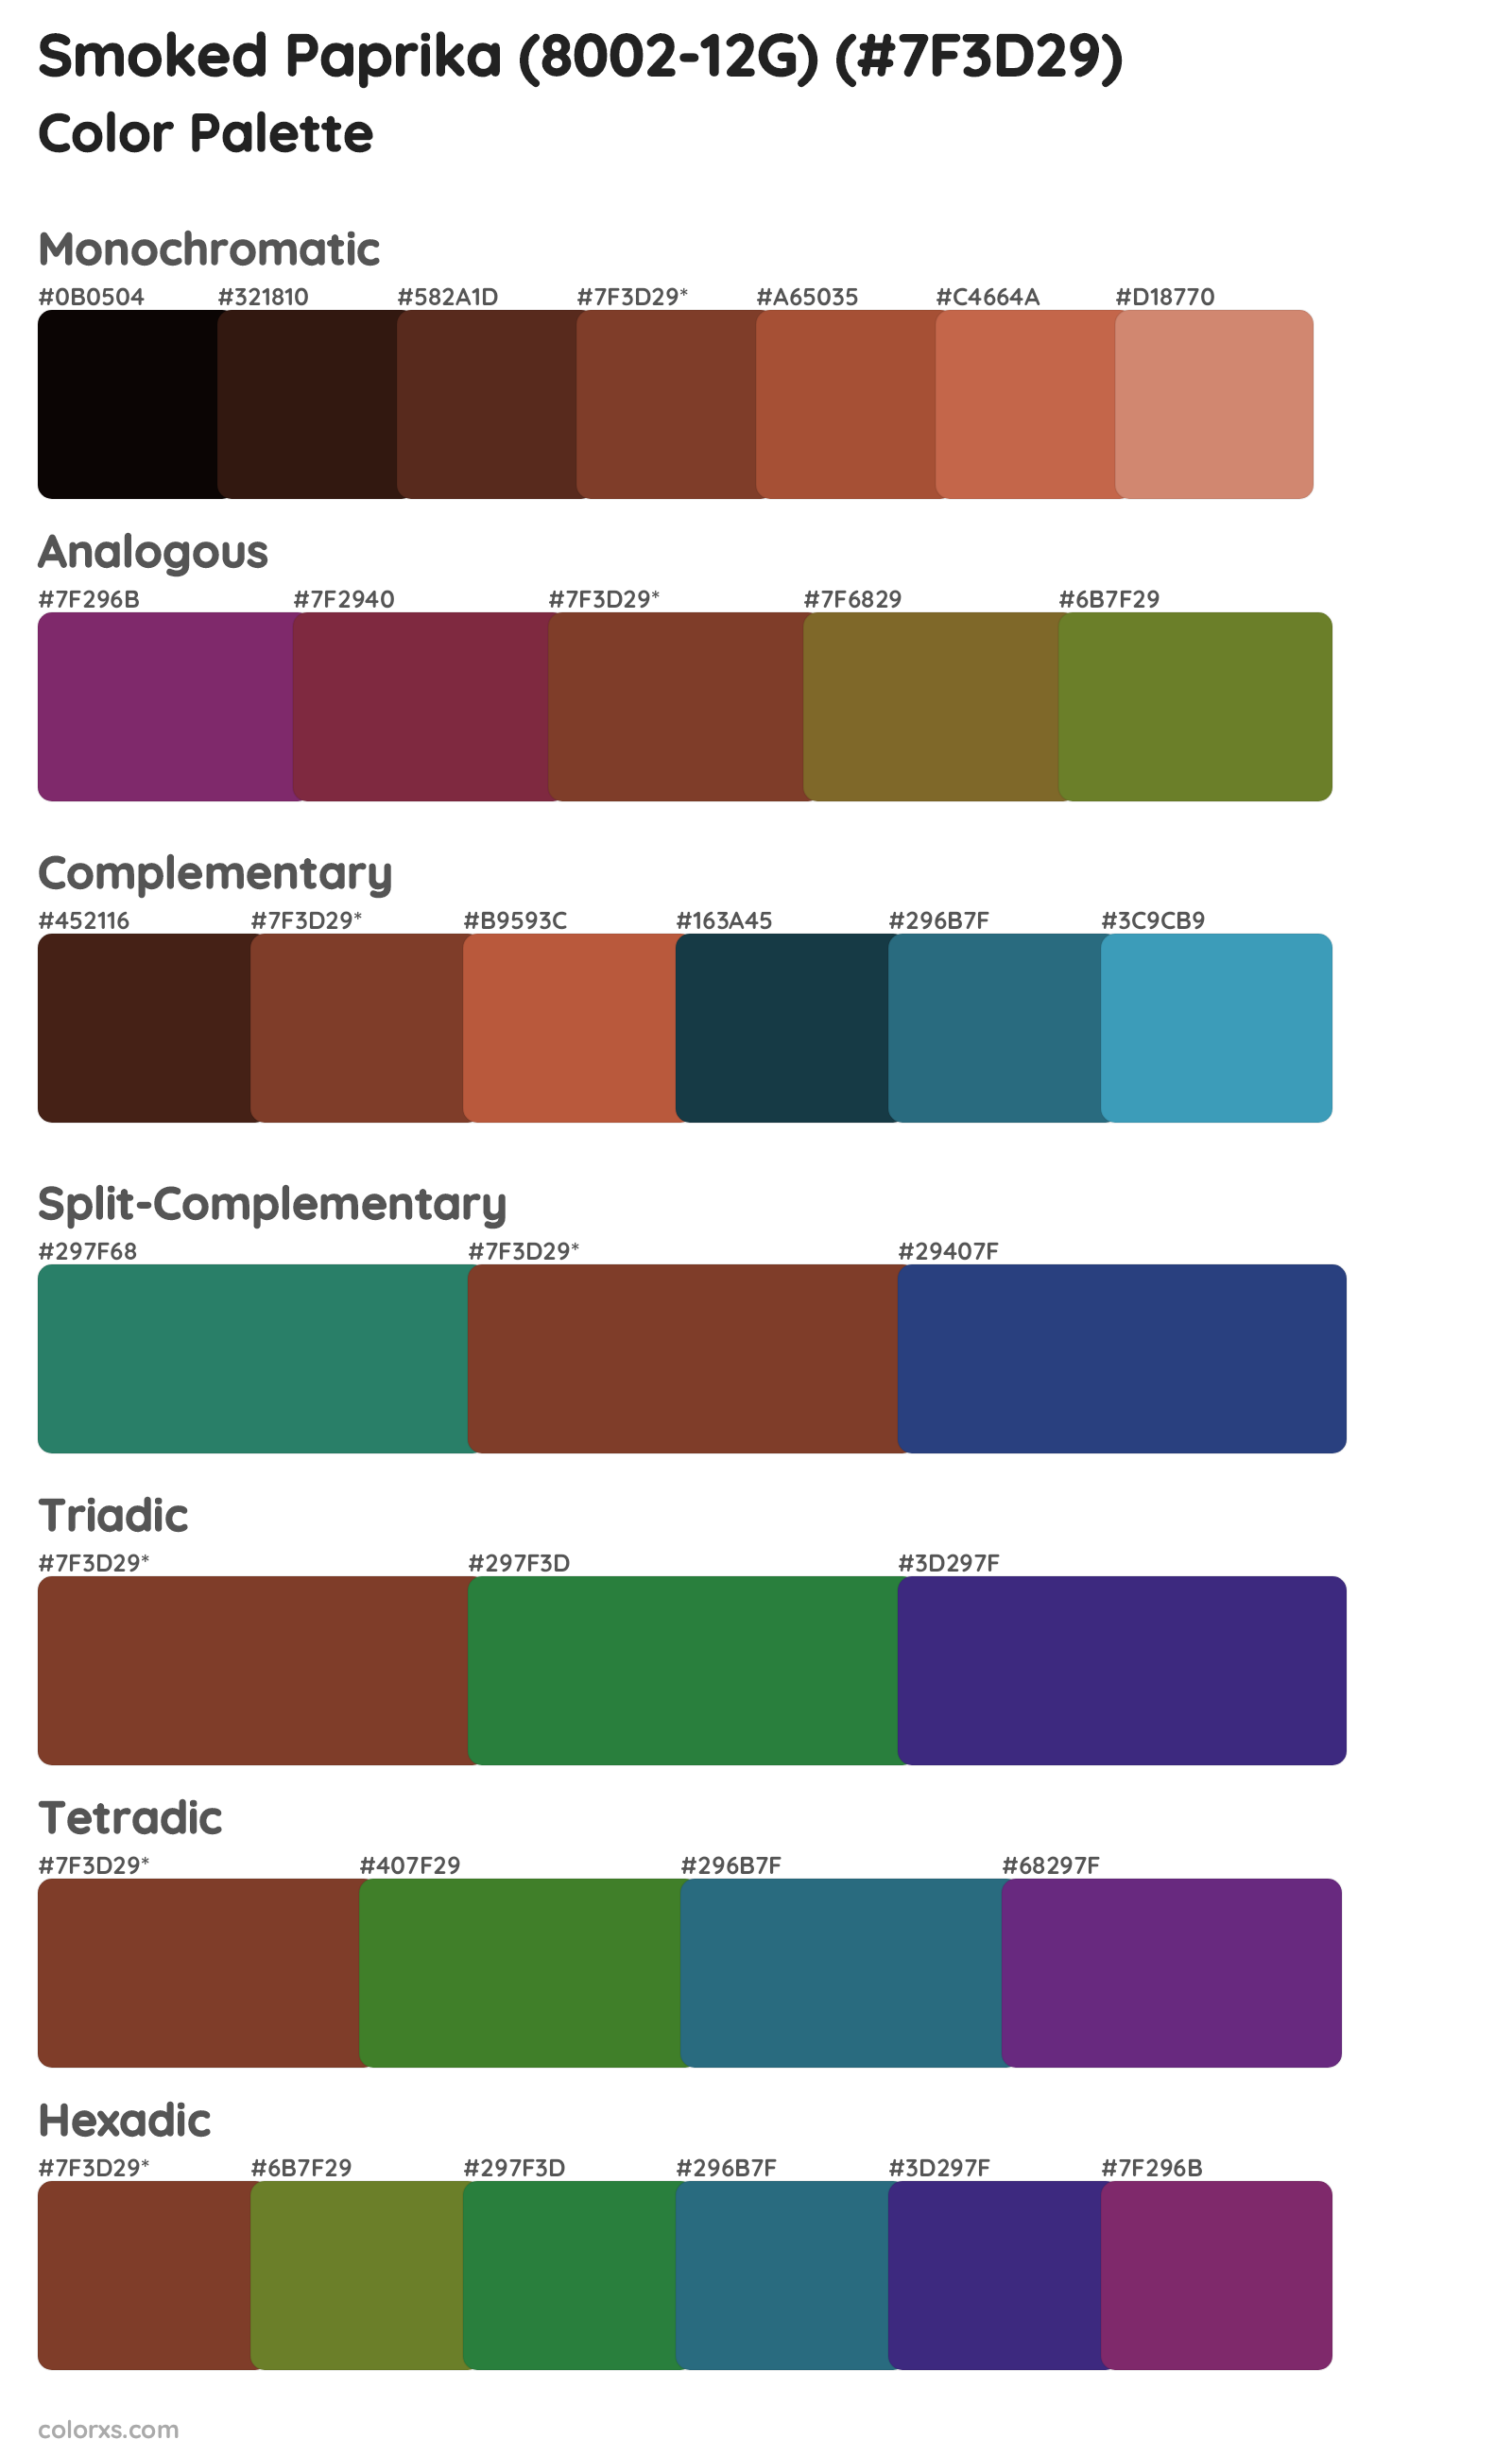 Smoked Paprika (8002-12G) Color Scheme Palettes